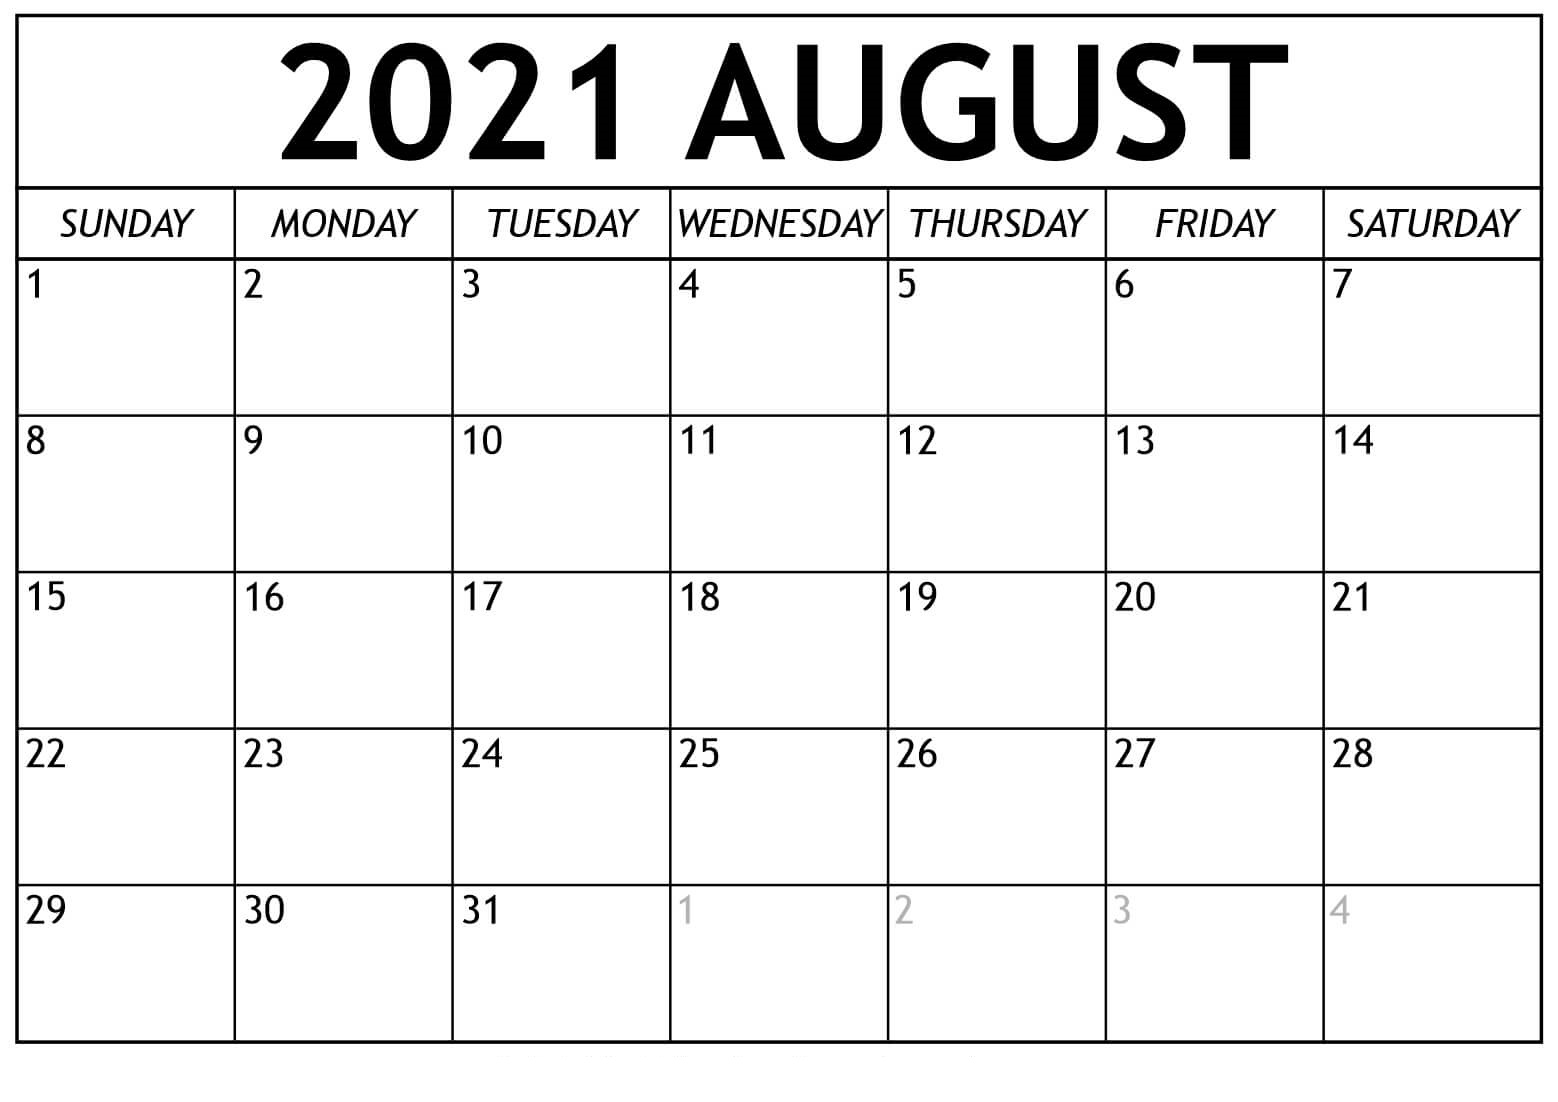 August Calendar 2021 Malayalam